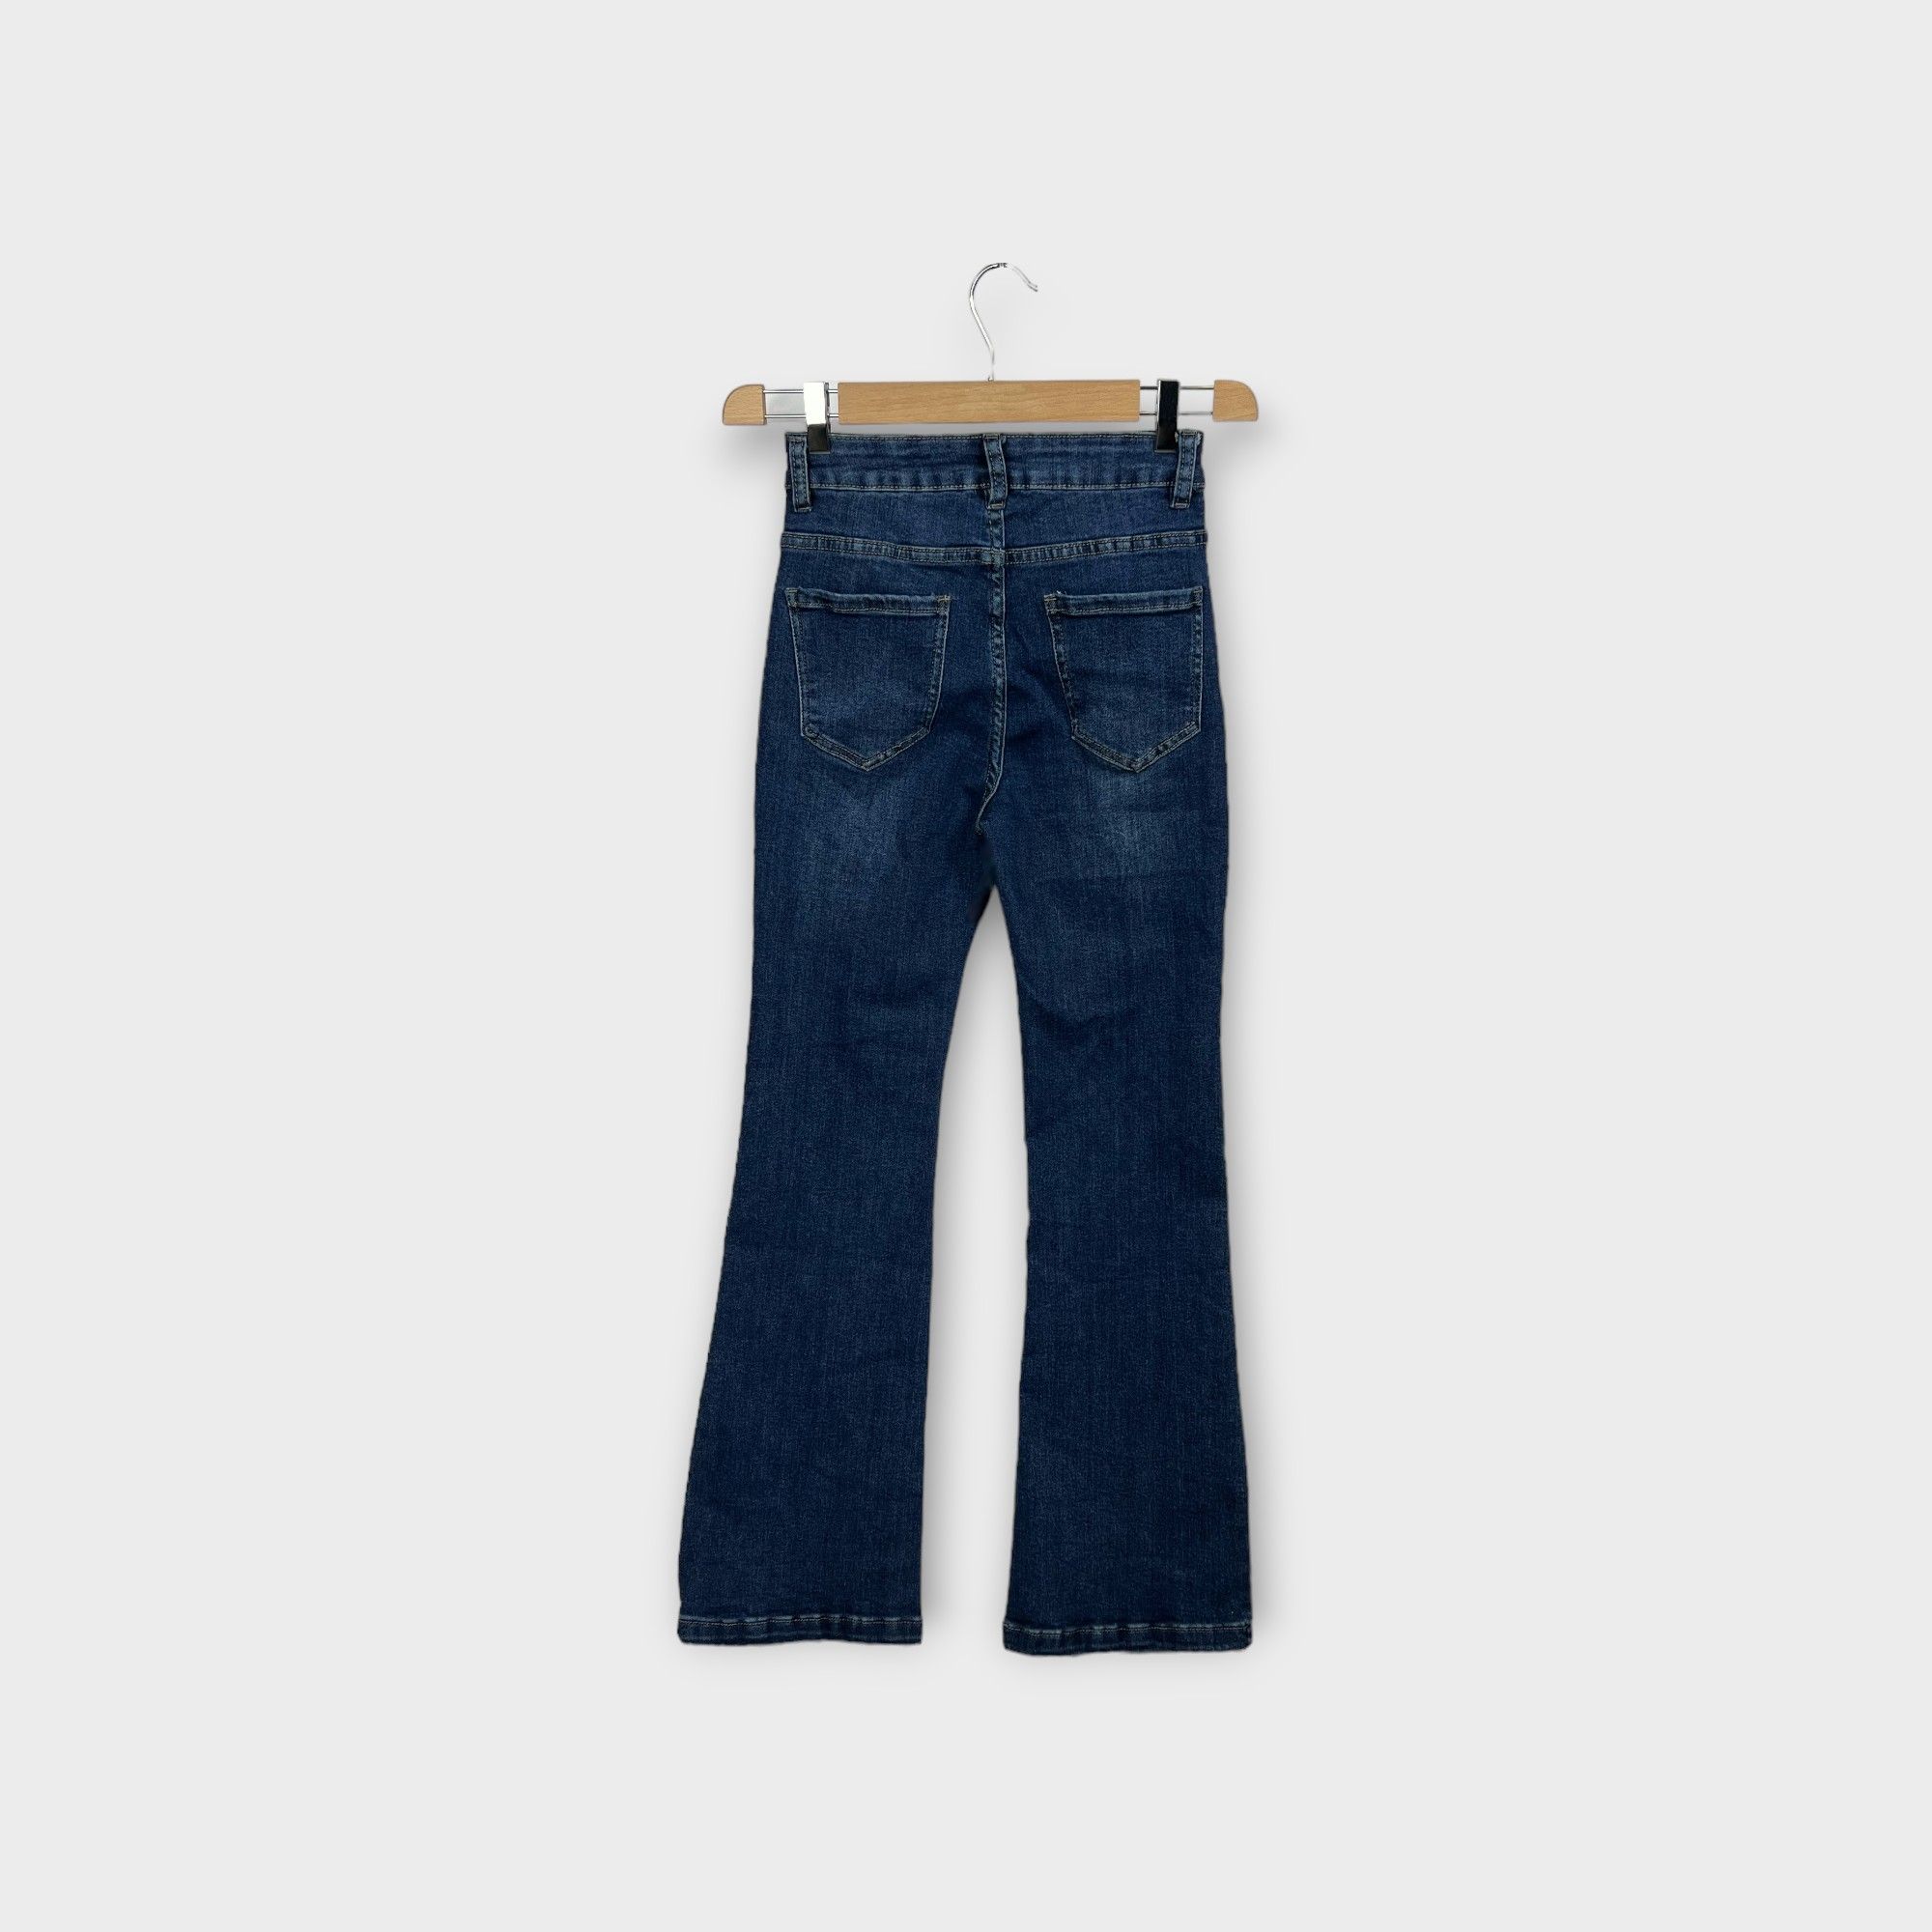 images/virtuemart/product/HELLEH jeans donna modello a zampetta super stretch colore denim 2.jpg